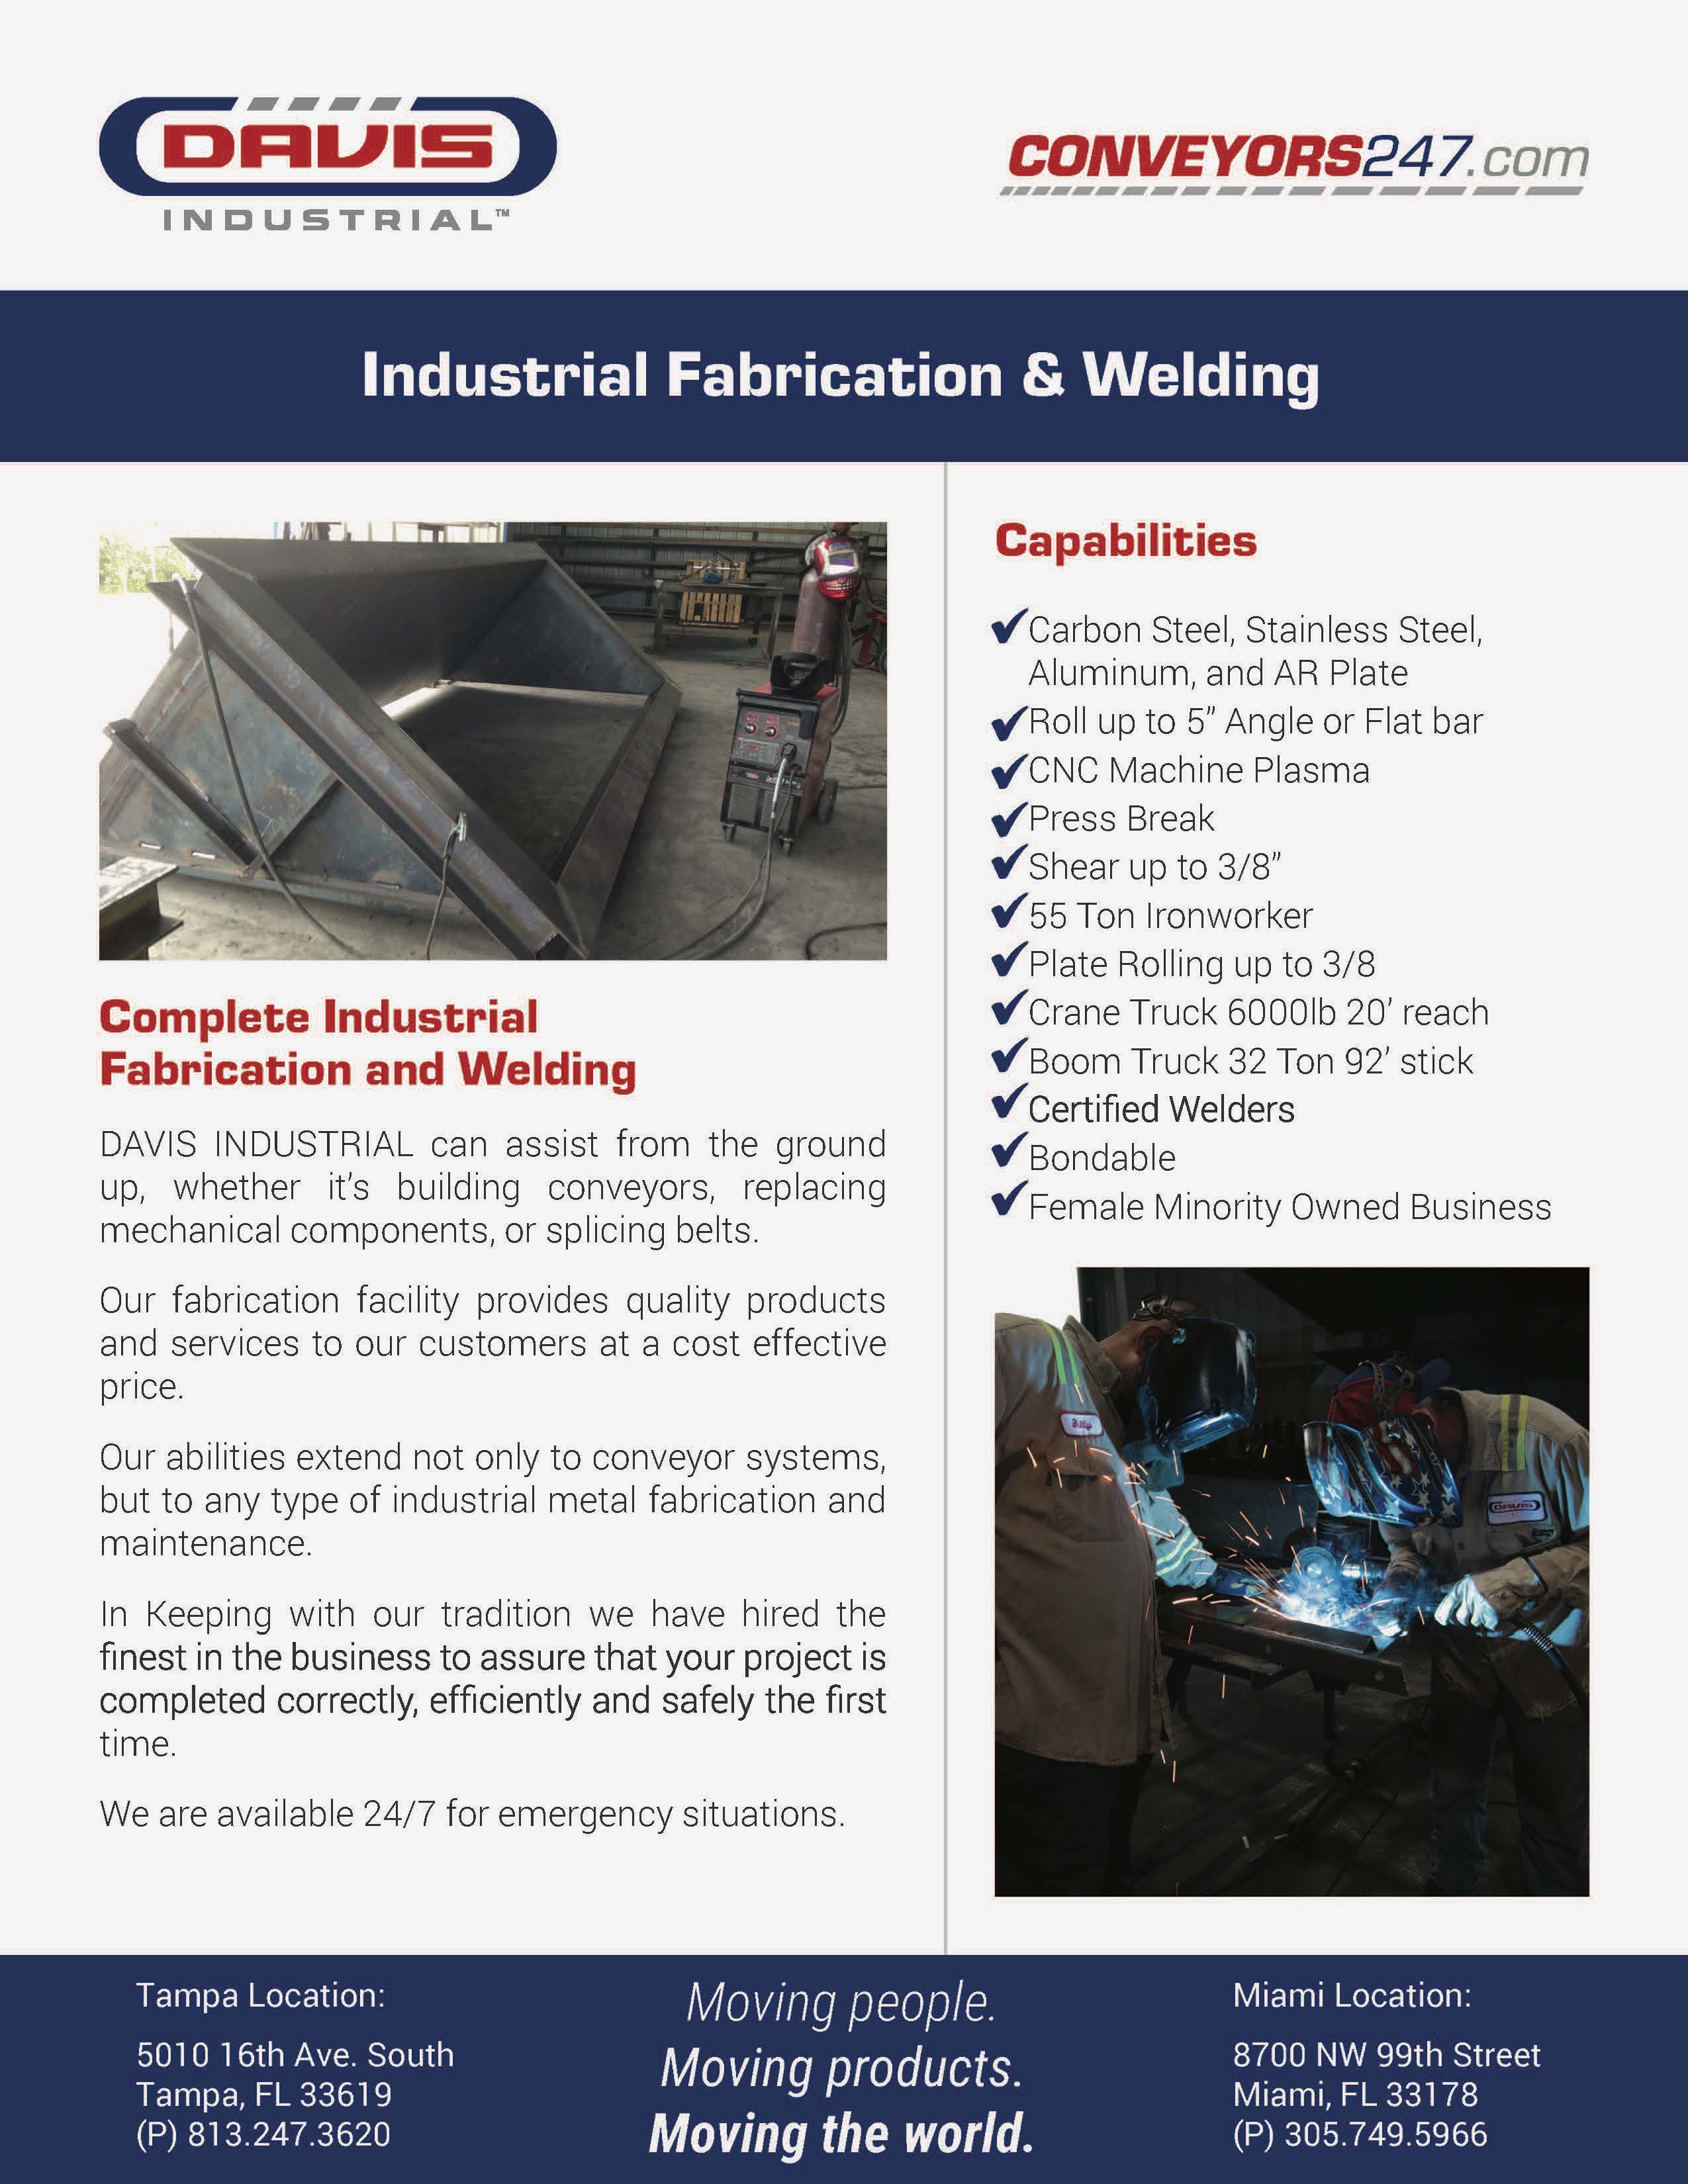 davis-industrial-fabrication-flier2.1b